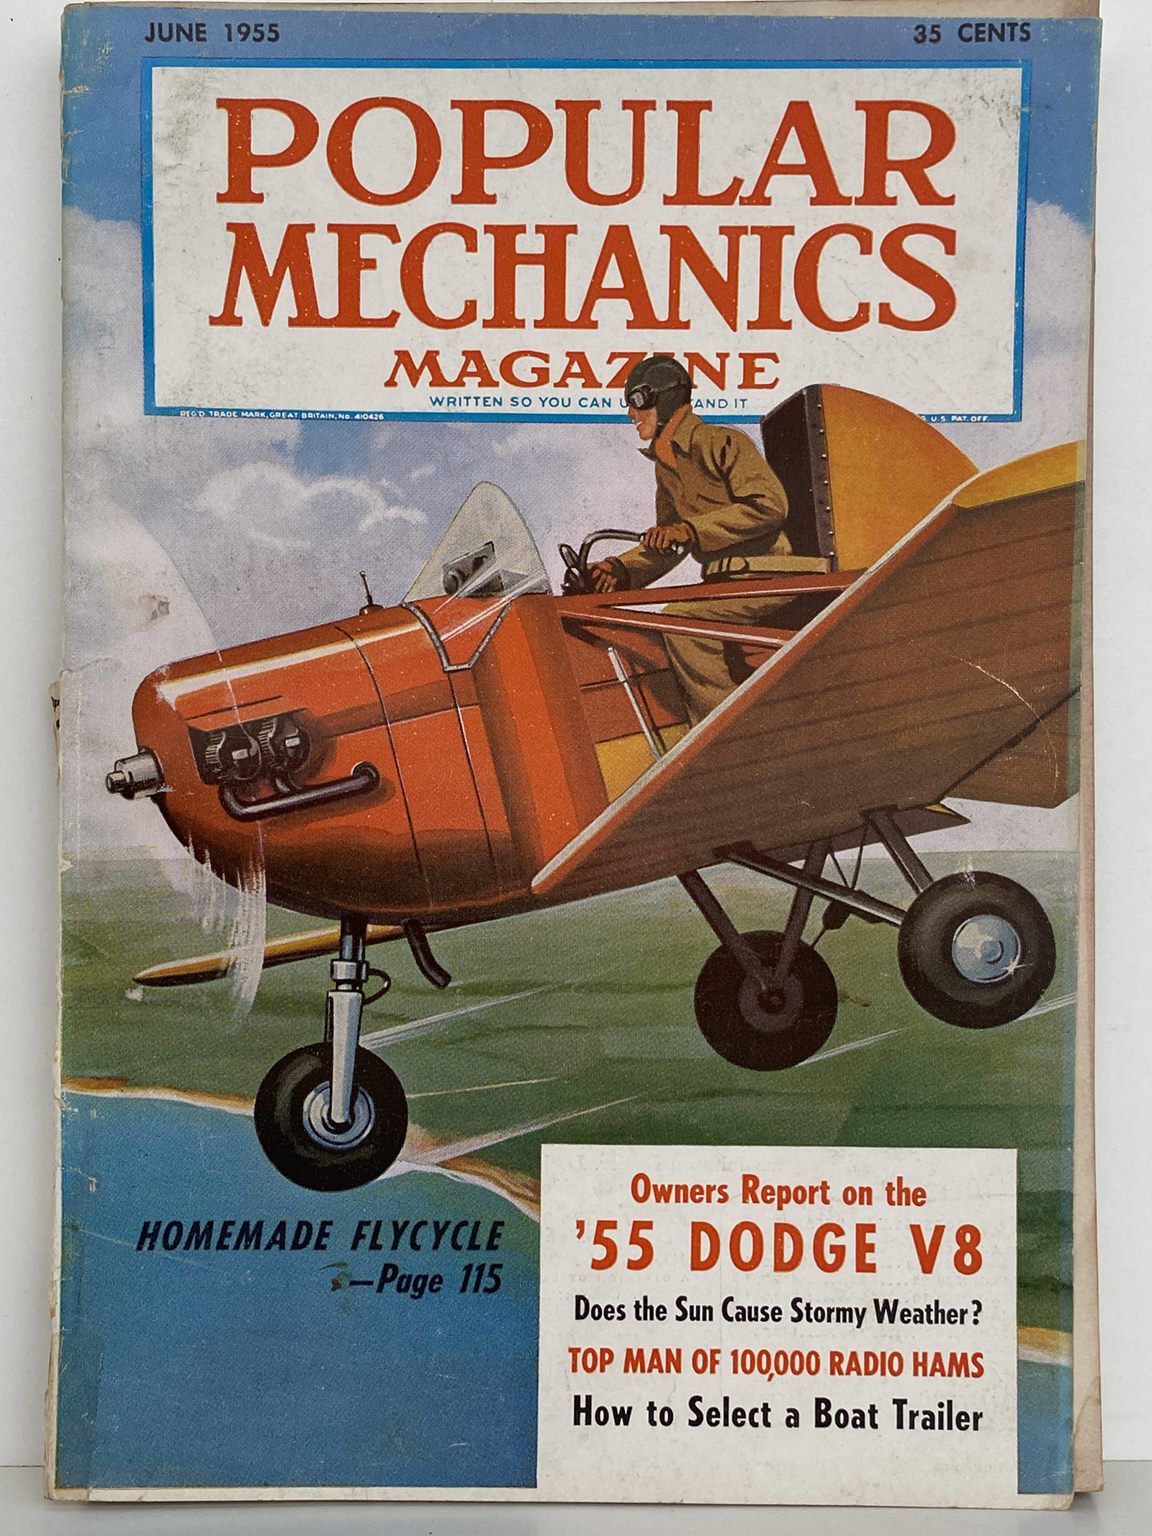 VINTAGE MAGAZINE: Popular Mechanics - Vol. 103, No. 6 - June 1955